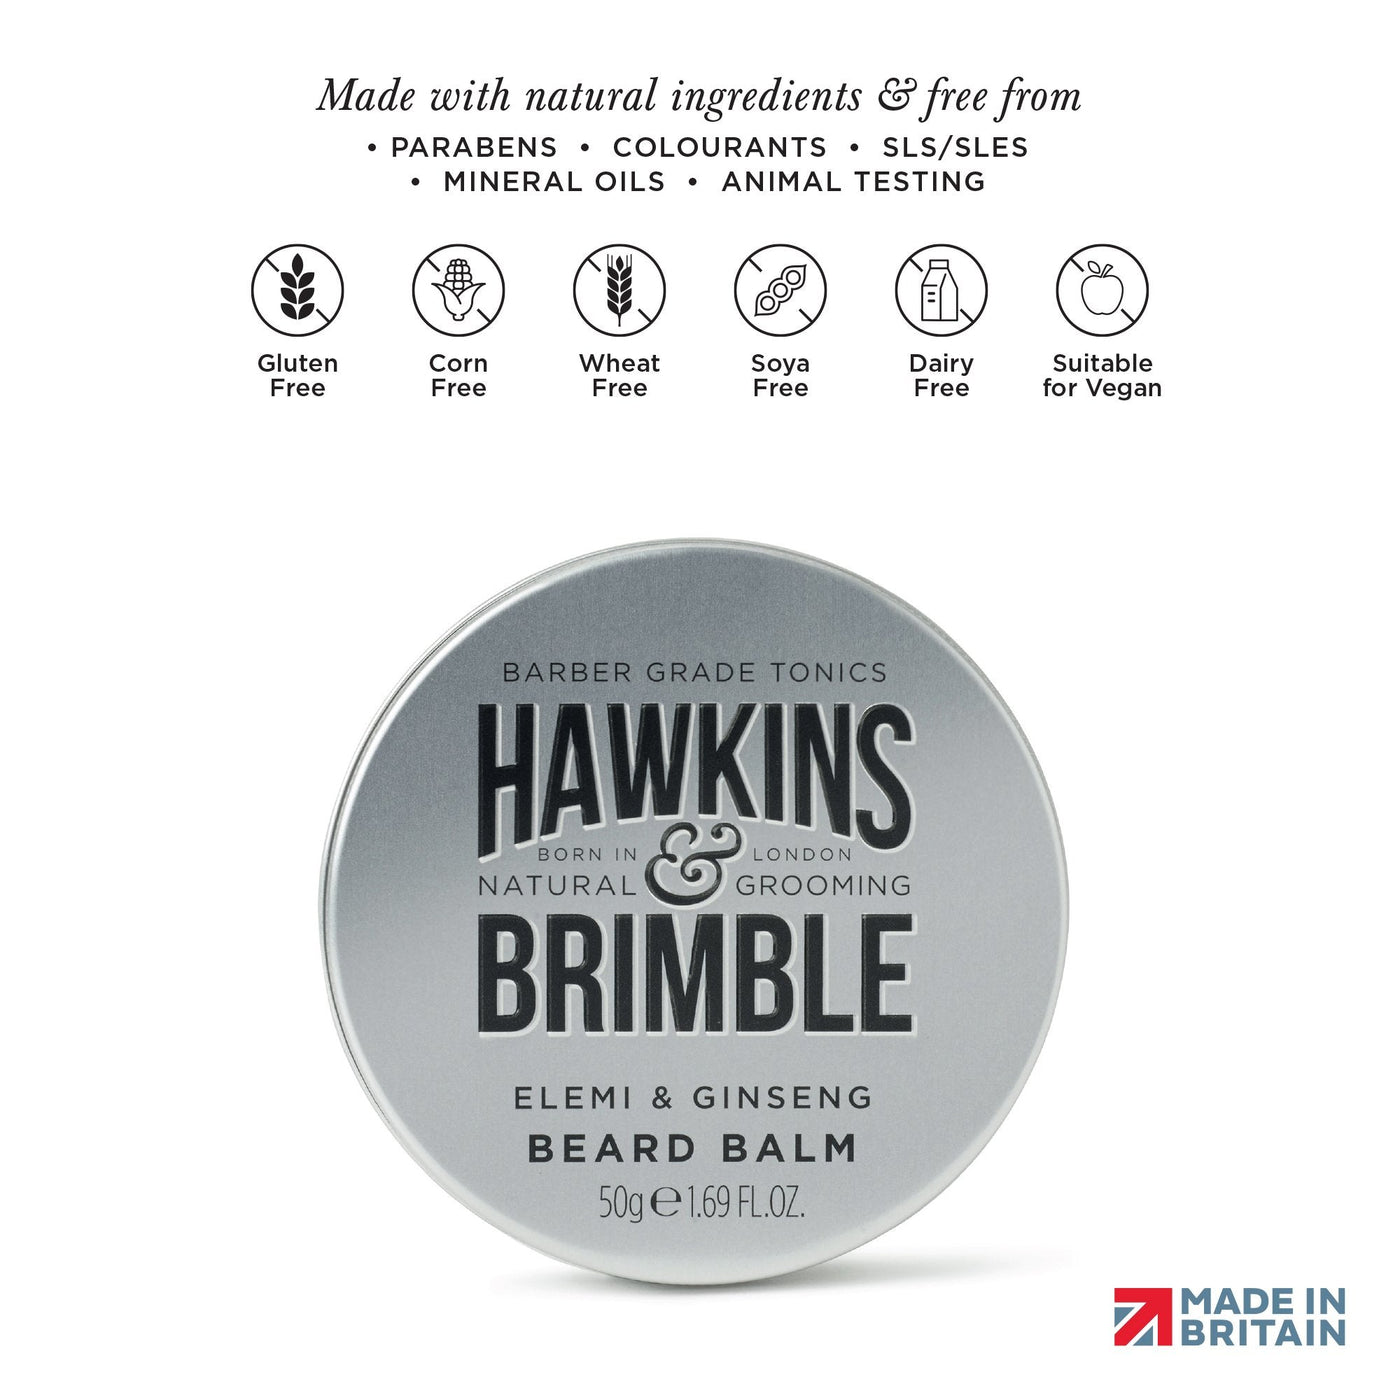 Beard Balm - Beard Care - Hawkins & Brimble Barbershop Male Grooming Products for Beards and Hair